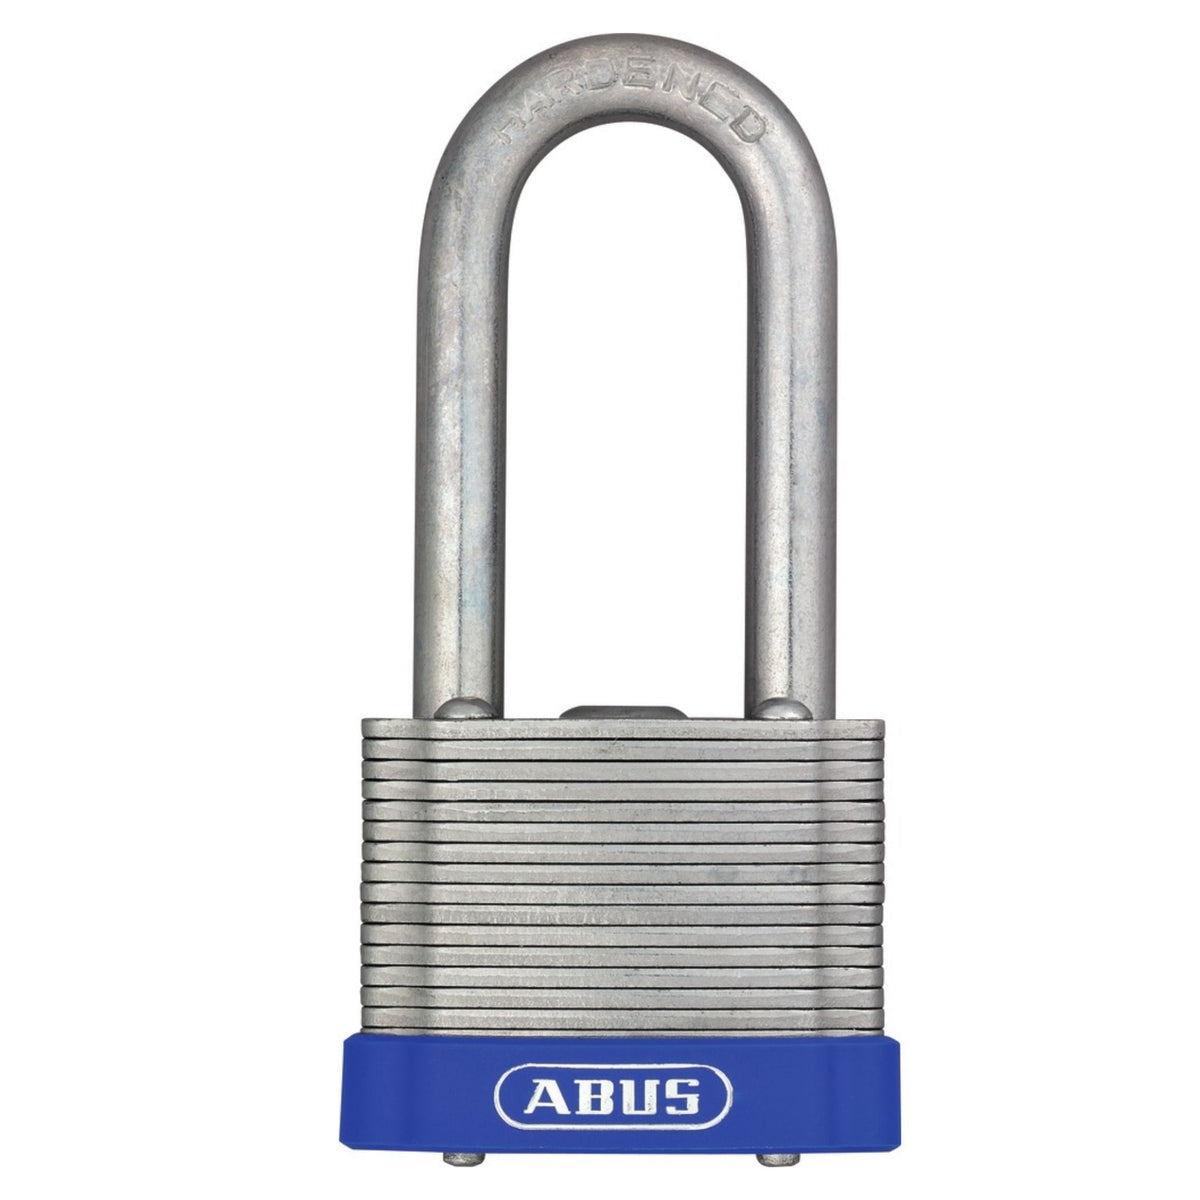 Abus 41/50HB50 KA 0020 Laminated Steel Padlock with Eterna Coating and 2-Inch Shackle Keyed Alike to Match Existing Key Number KA0020 - The Lock Source